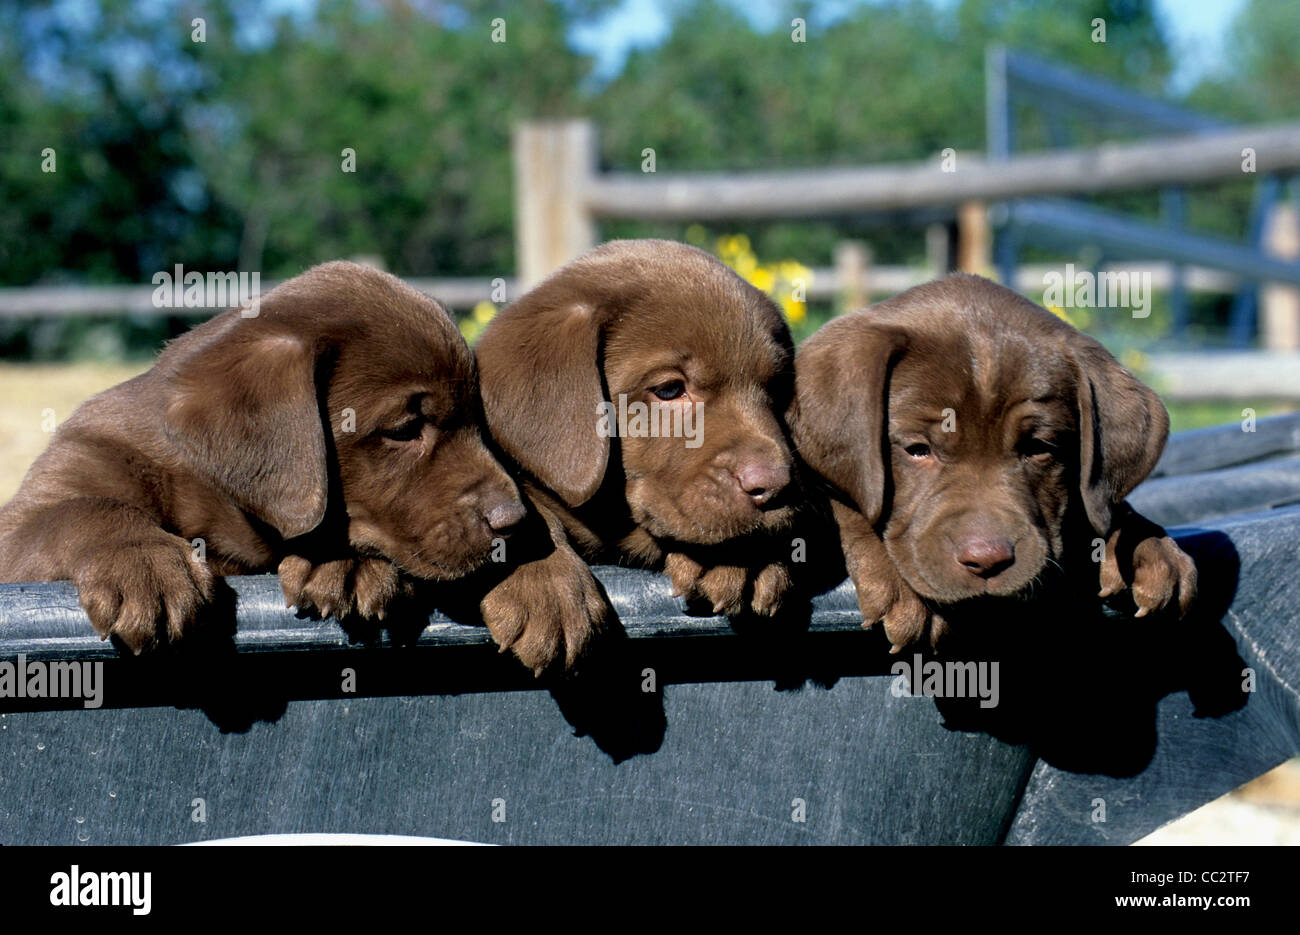 Six-week-old chocolate Labrador puppies in wheelbarrow Stock Photo - Alamy